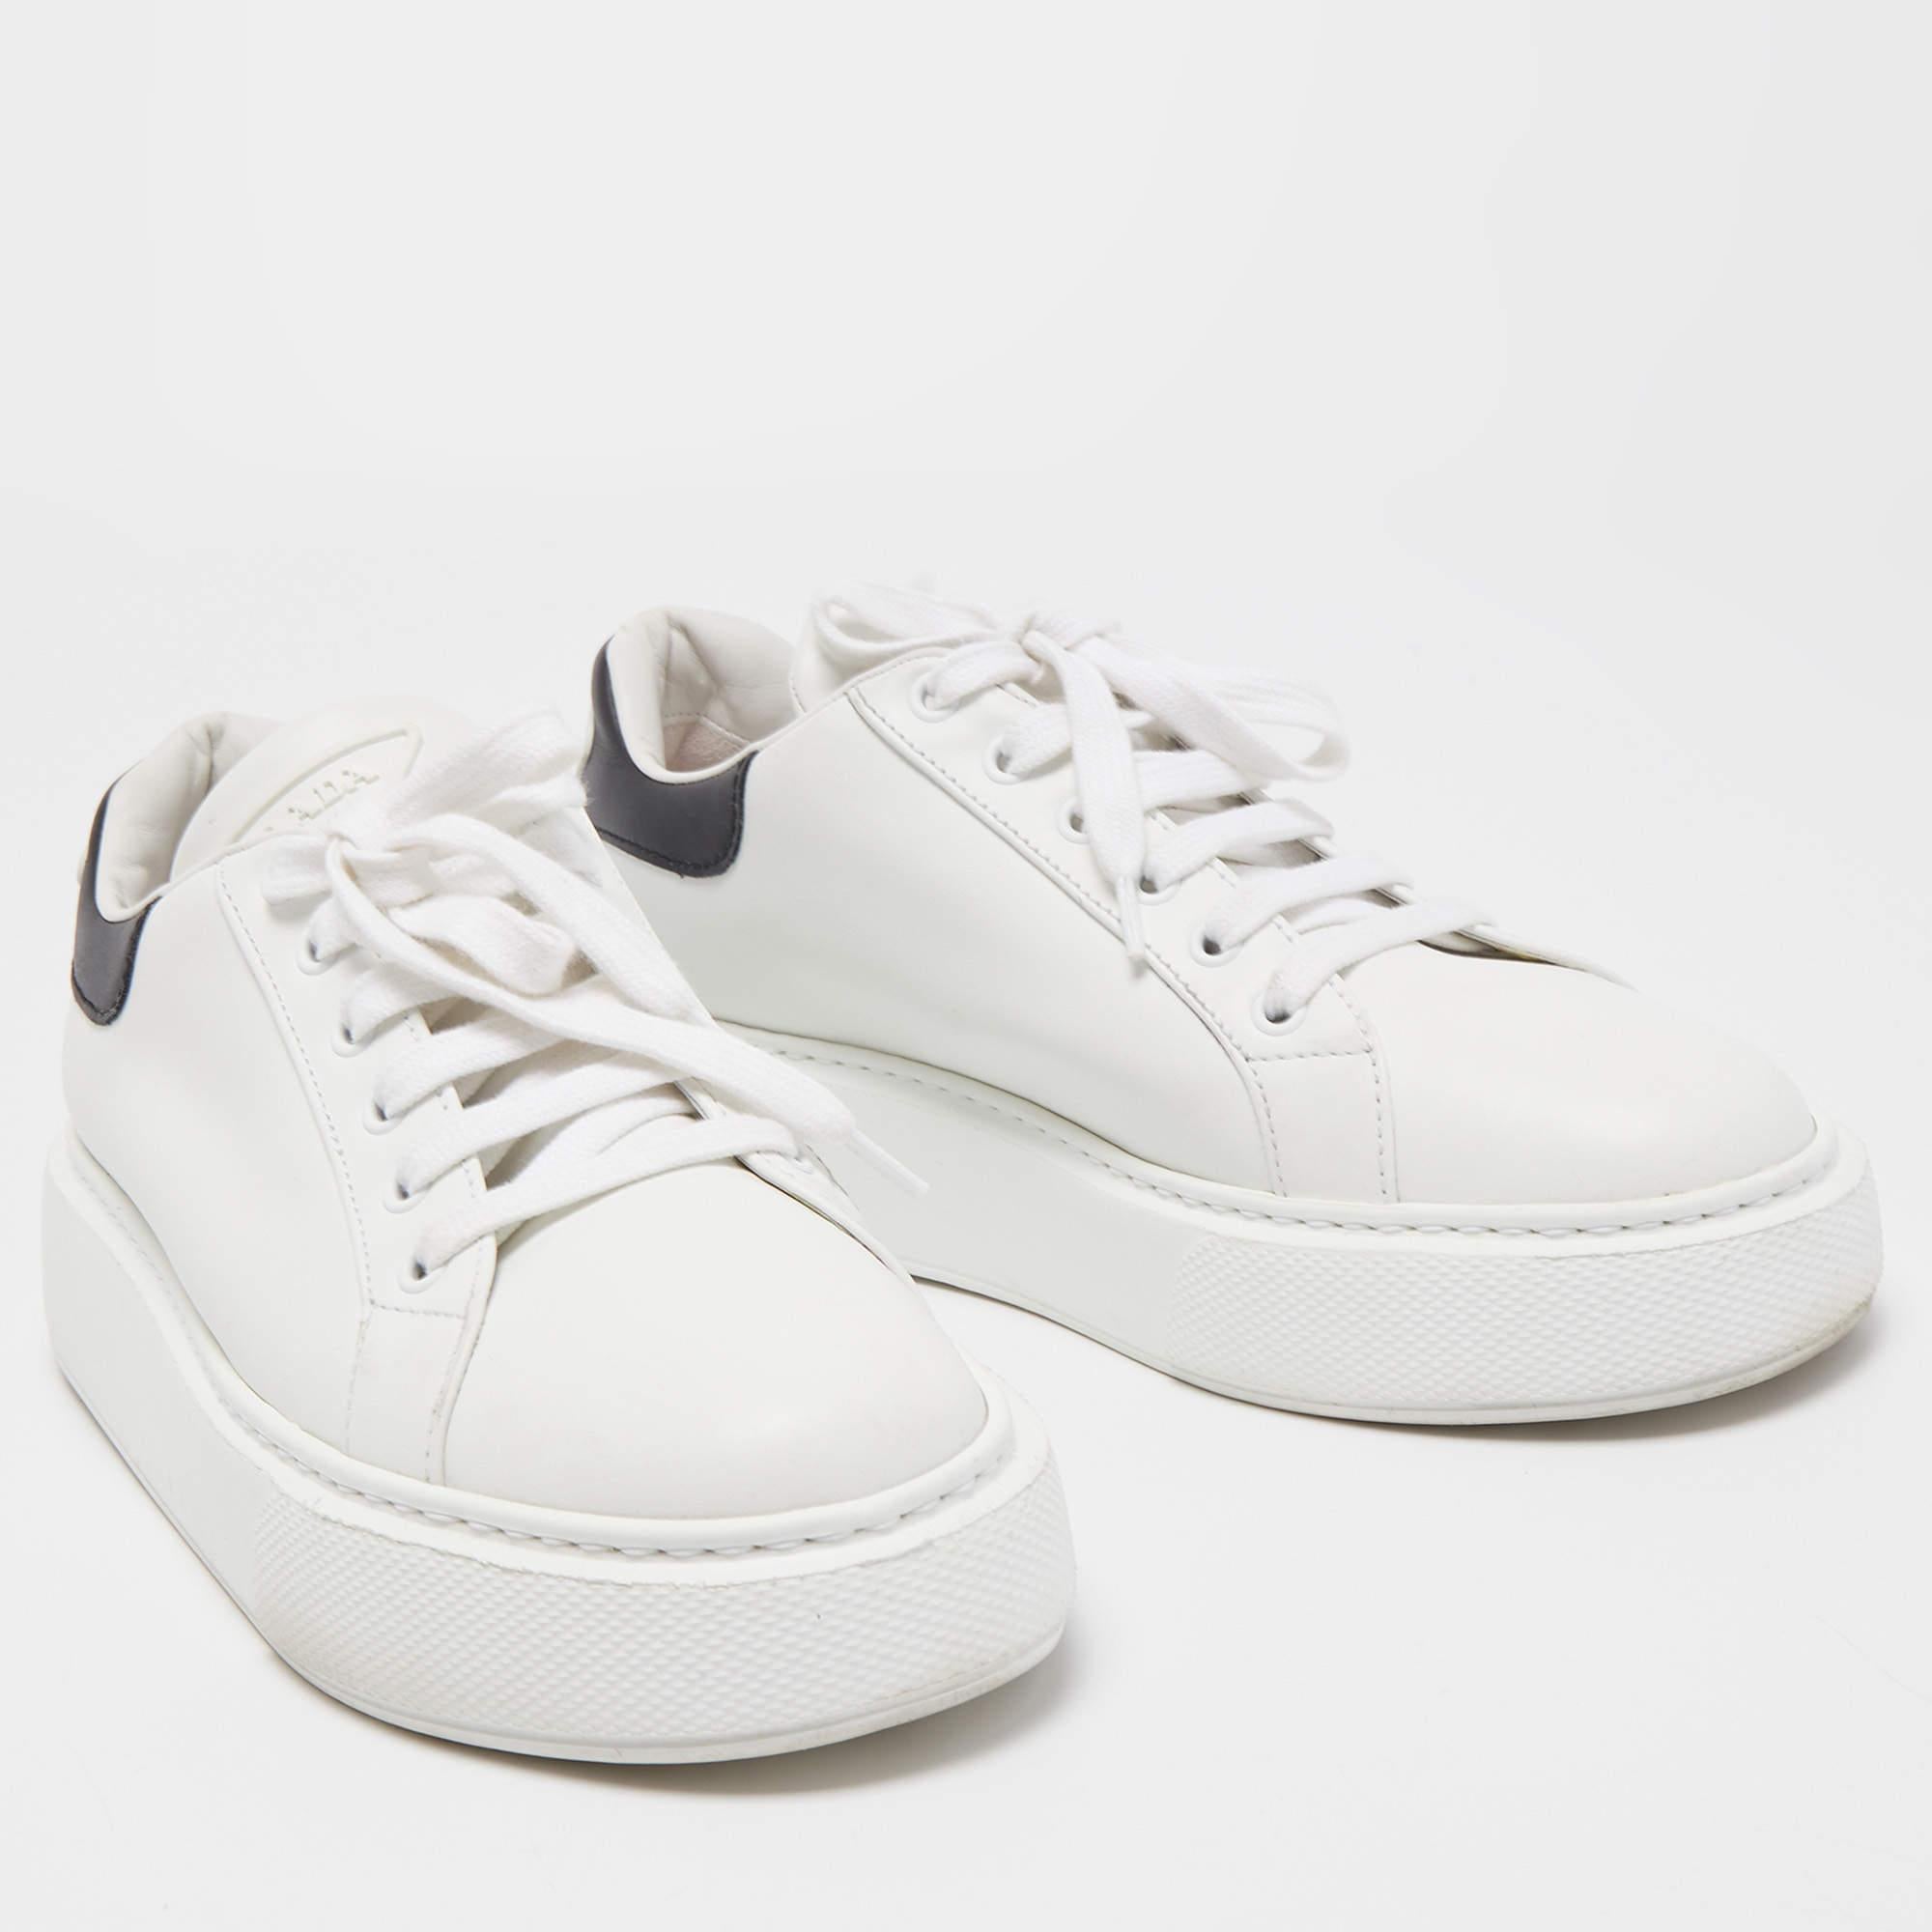 Prada White Leather Macro Low Top Sneakers Size 41 1